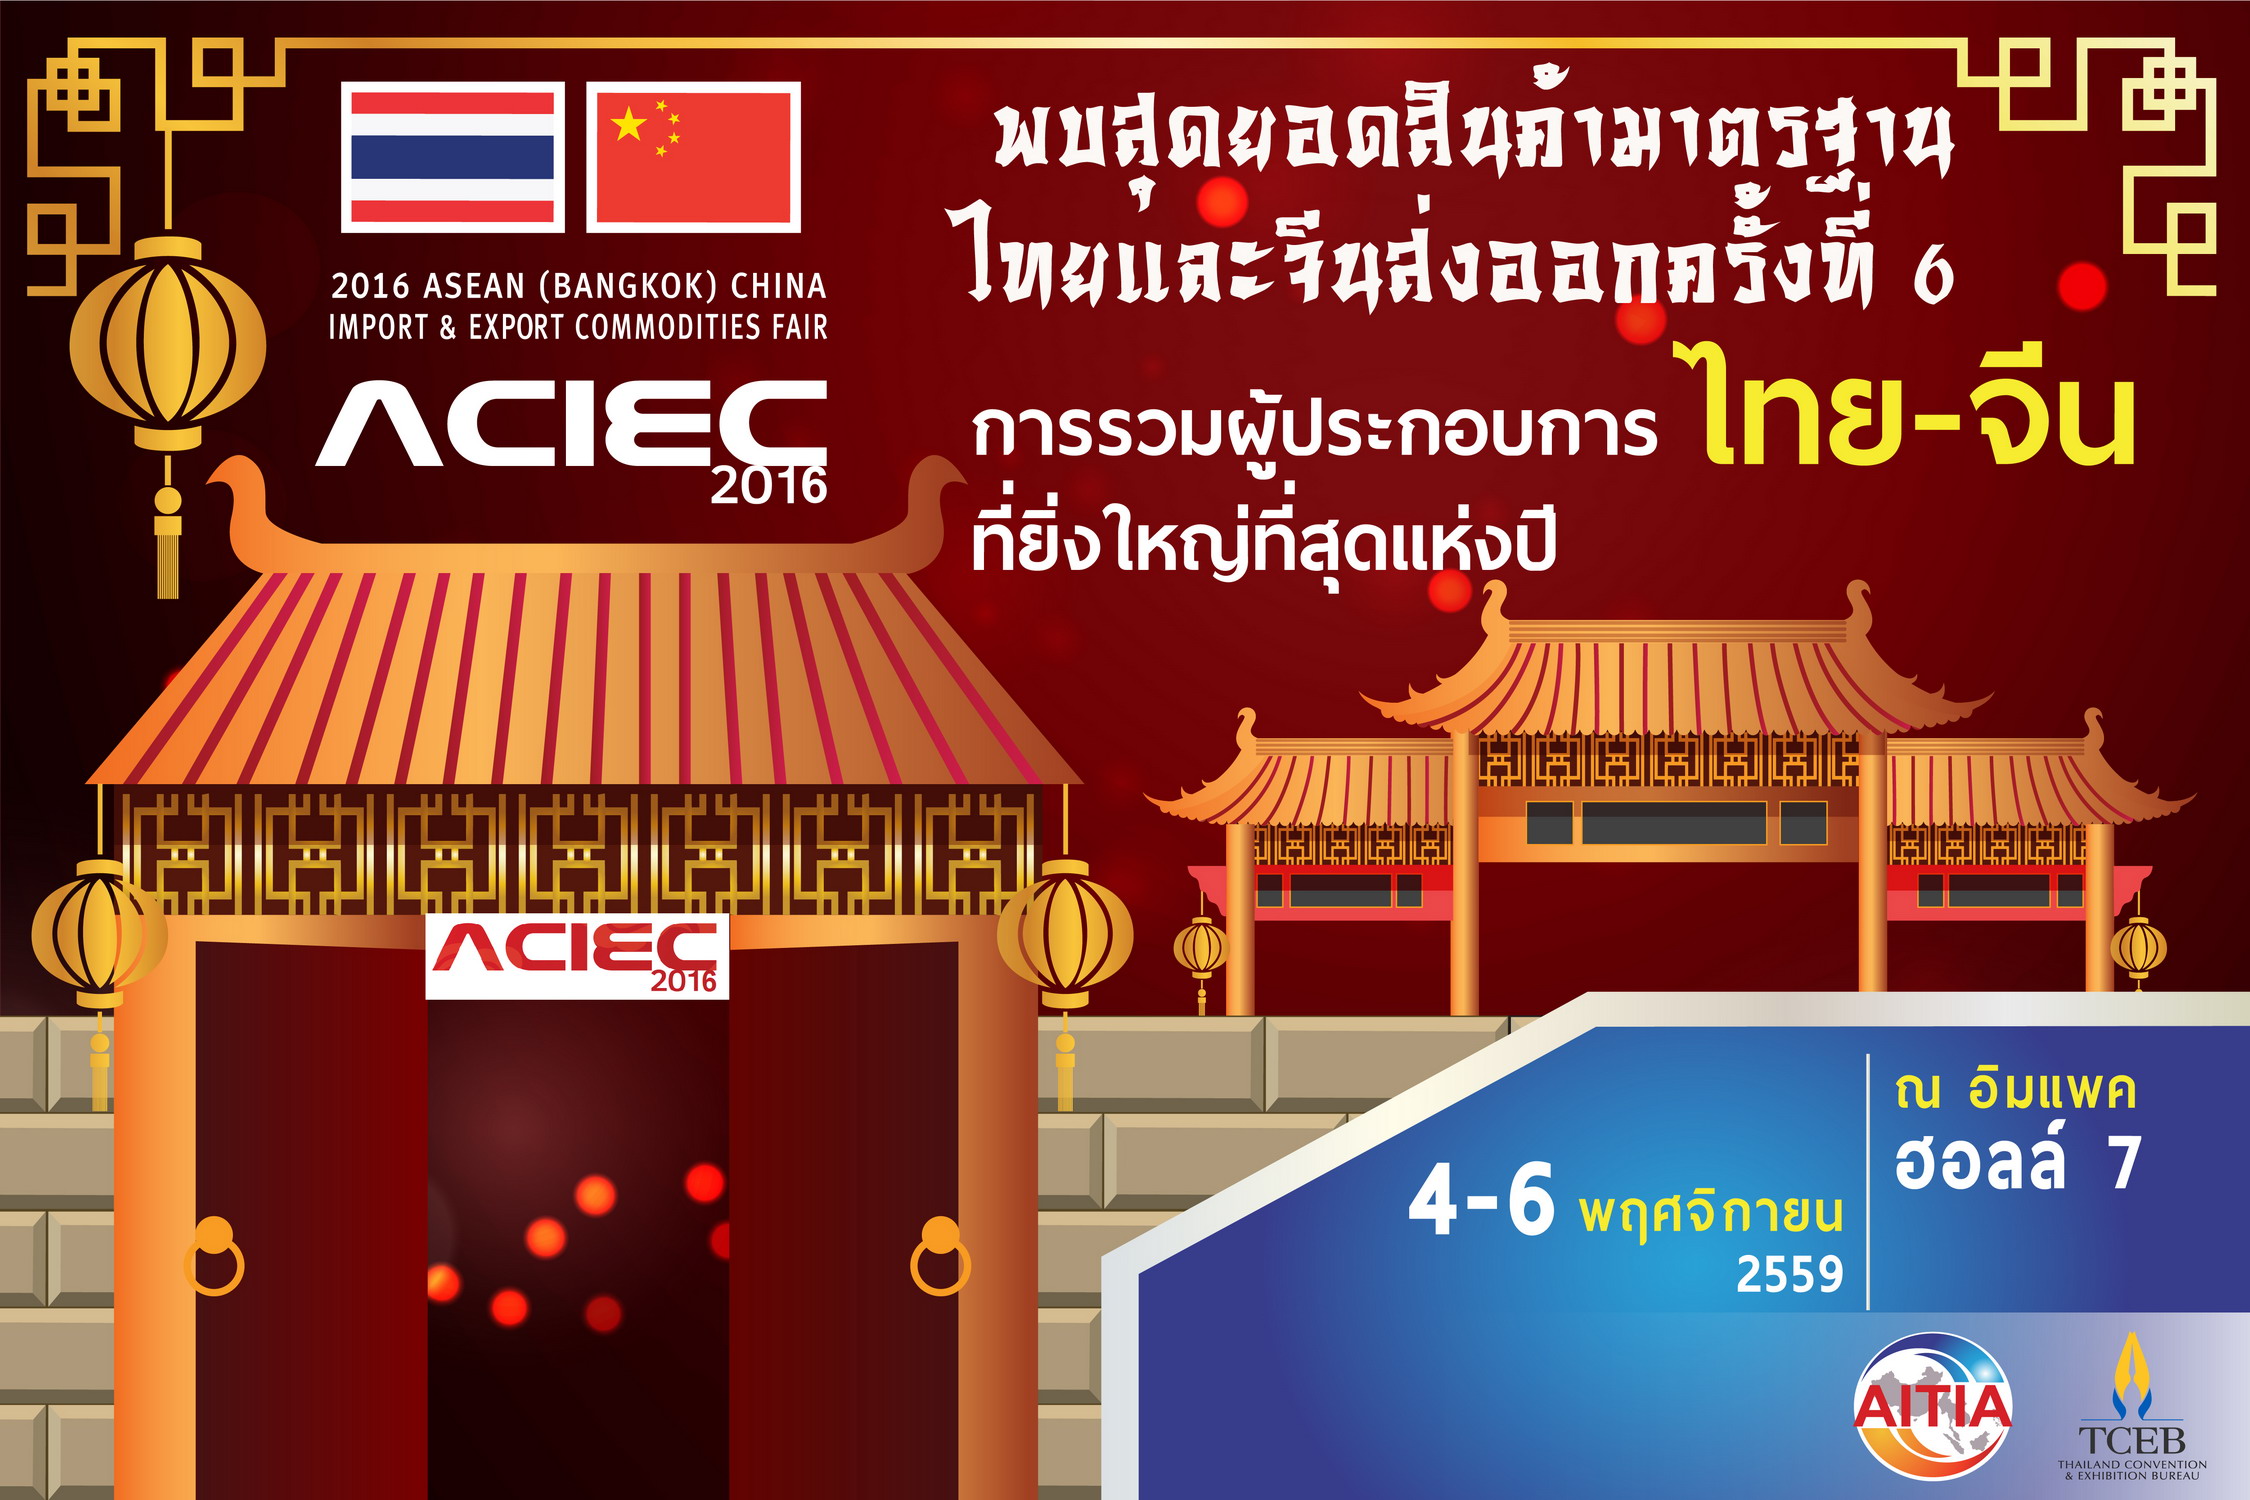 2016 ASEAN (Bangkok) China Import & Export Commodities Fair (ACIEC 2016)